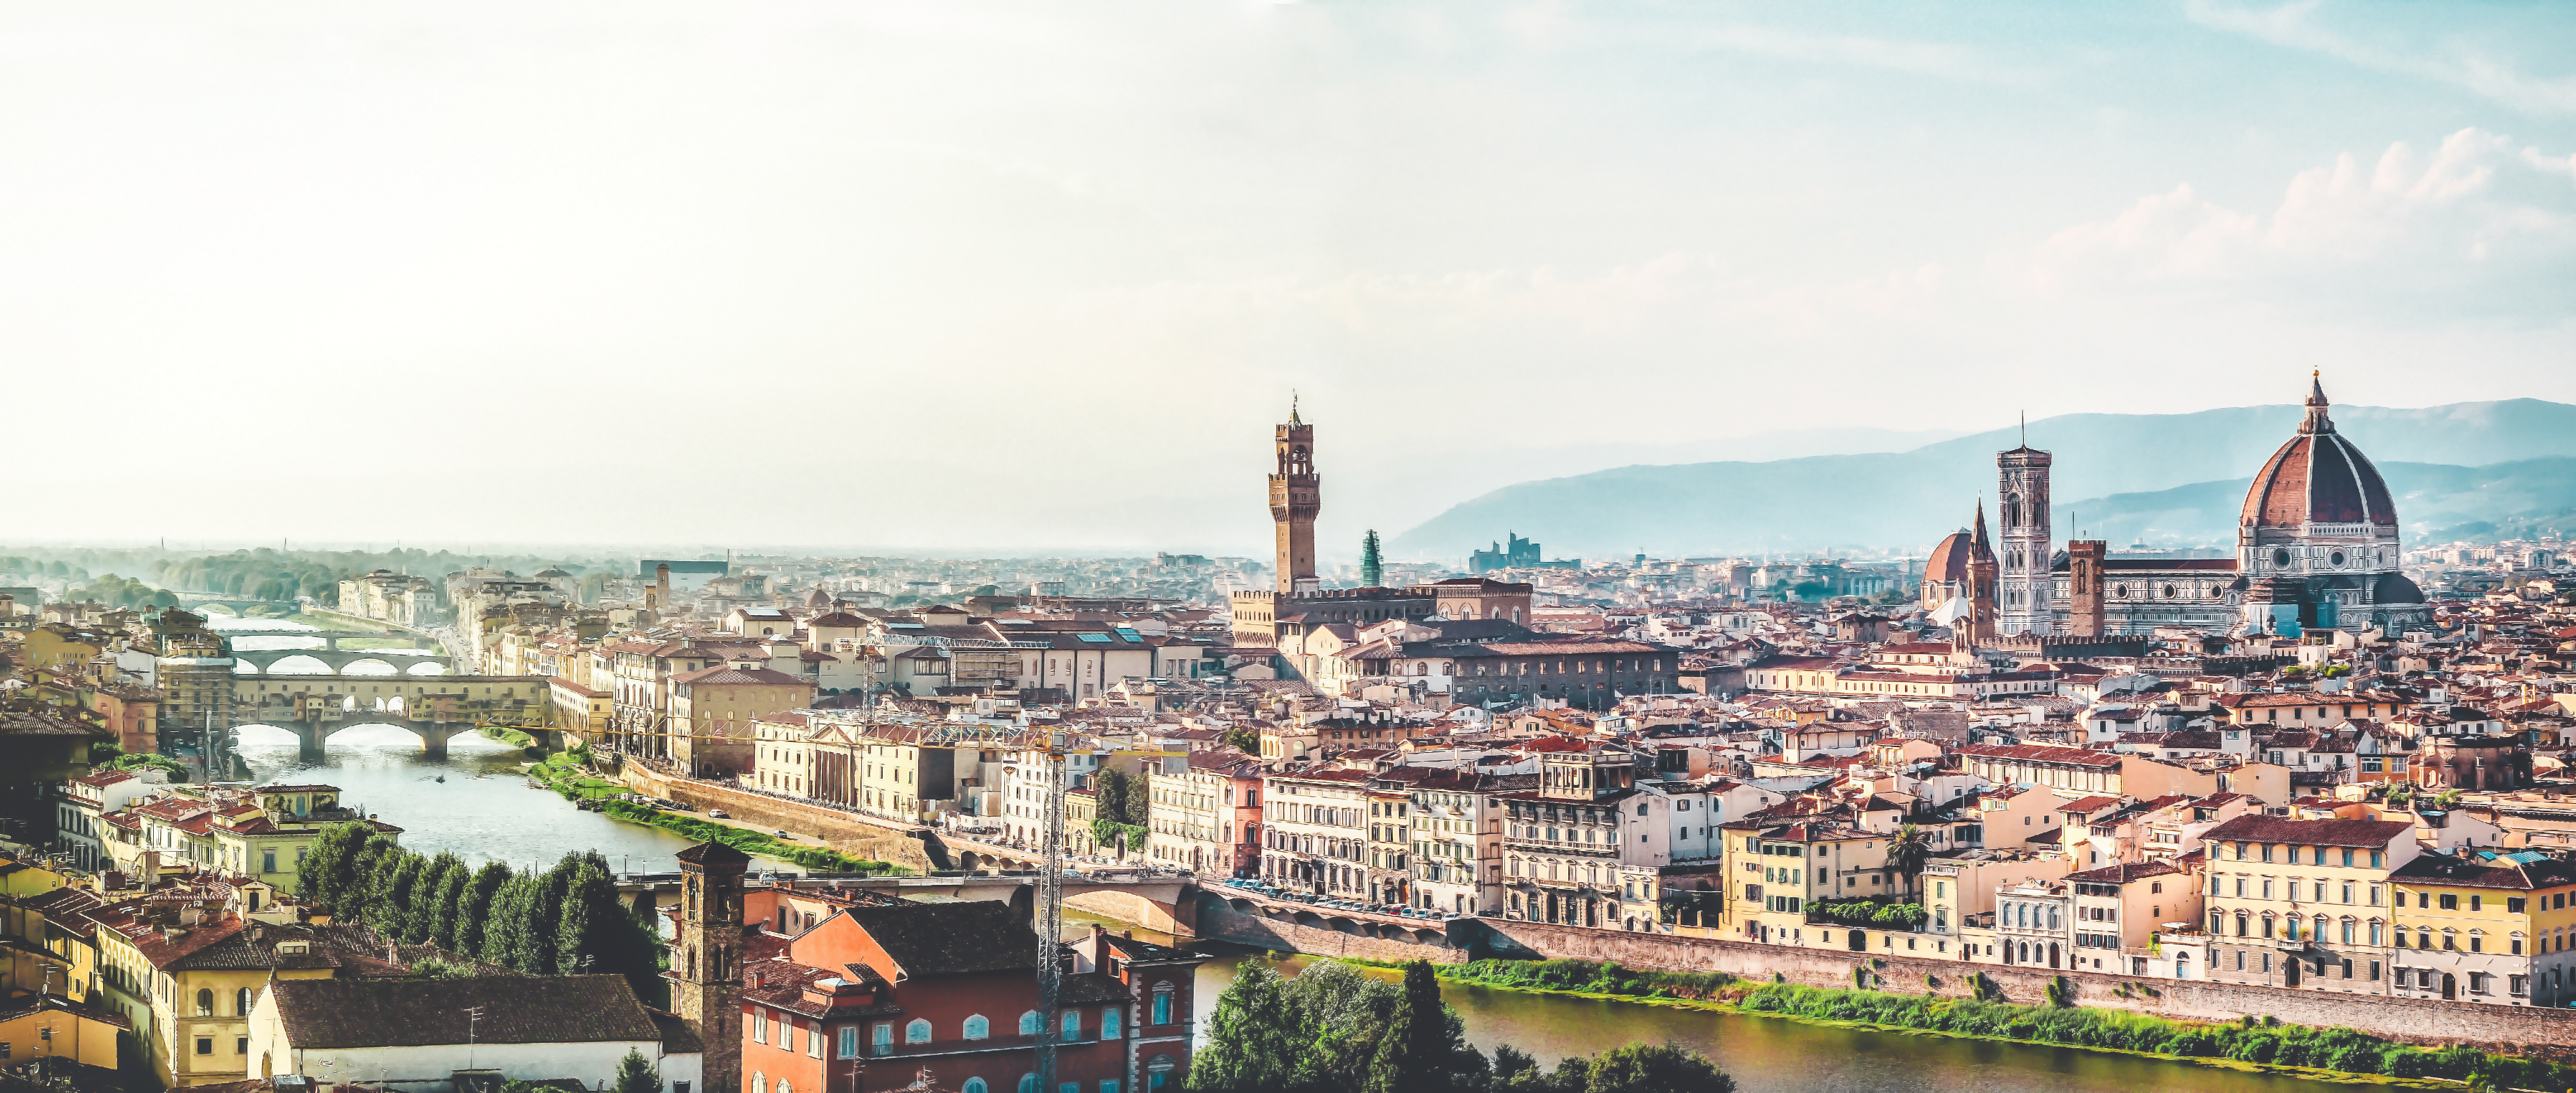 Specializzazione Territoriale sulla città di Firenze